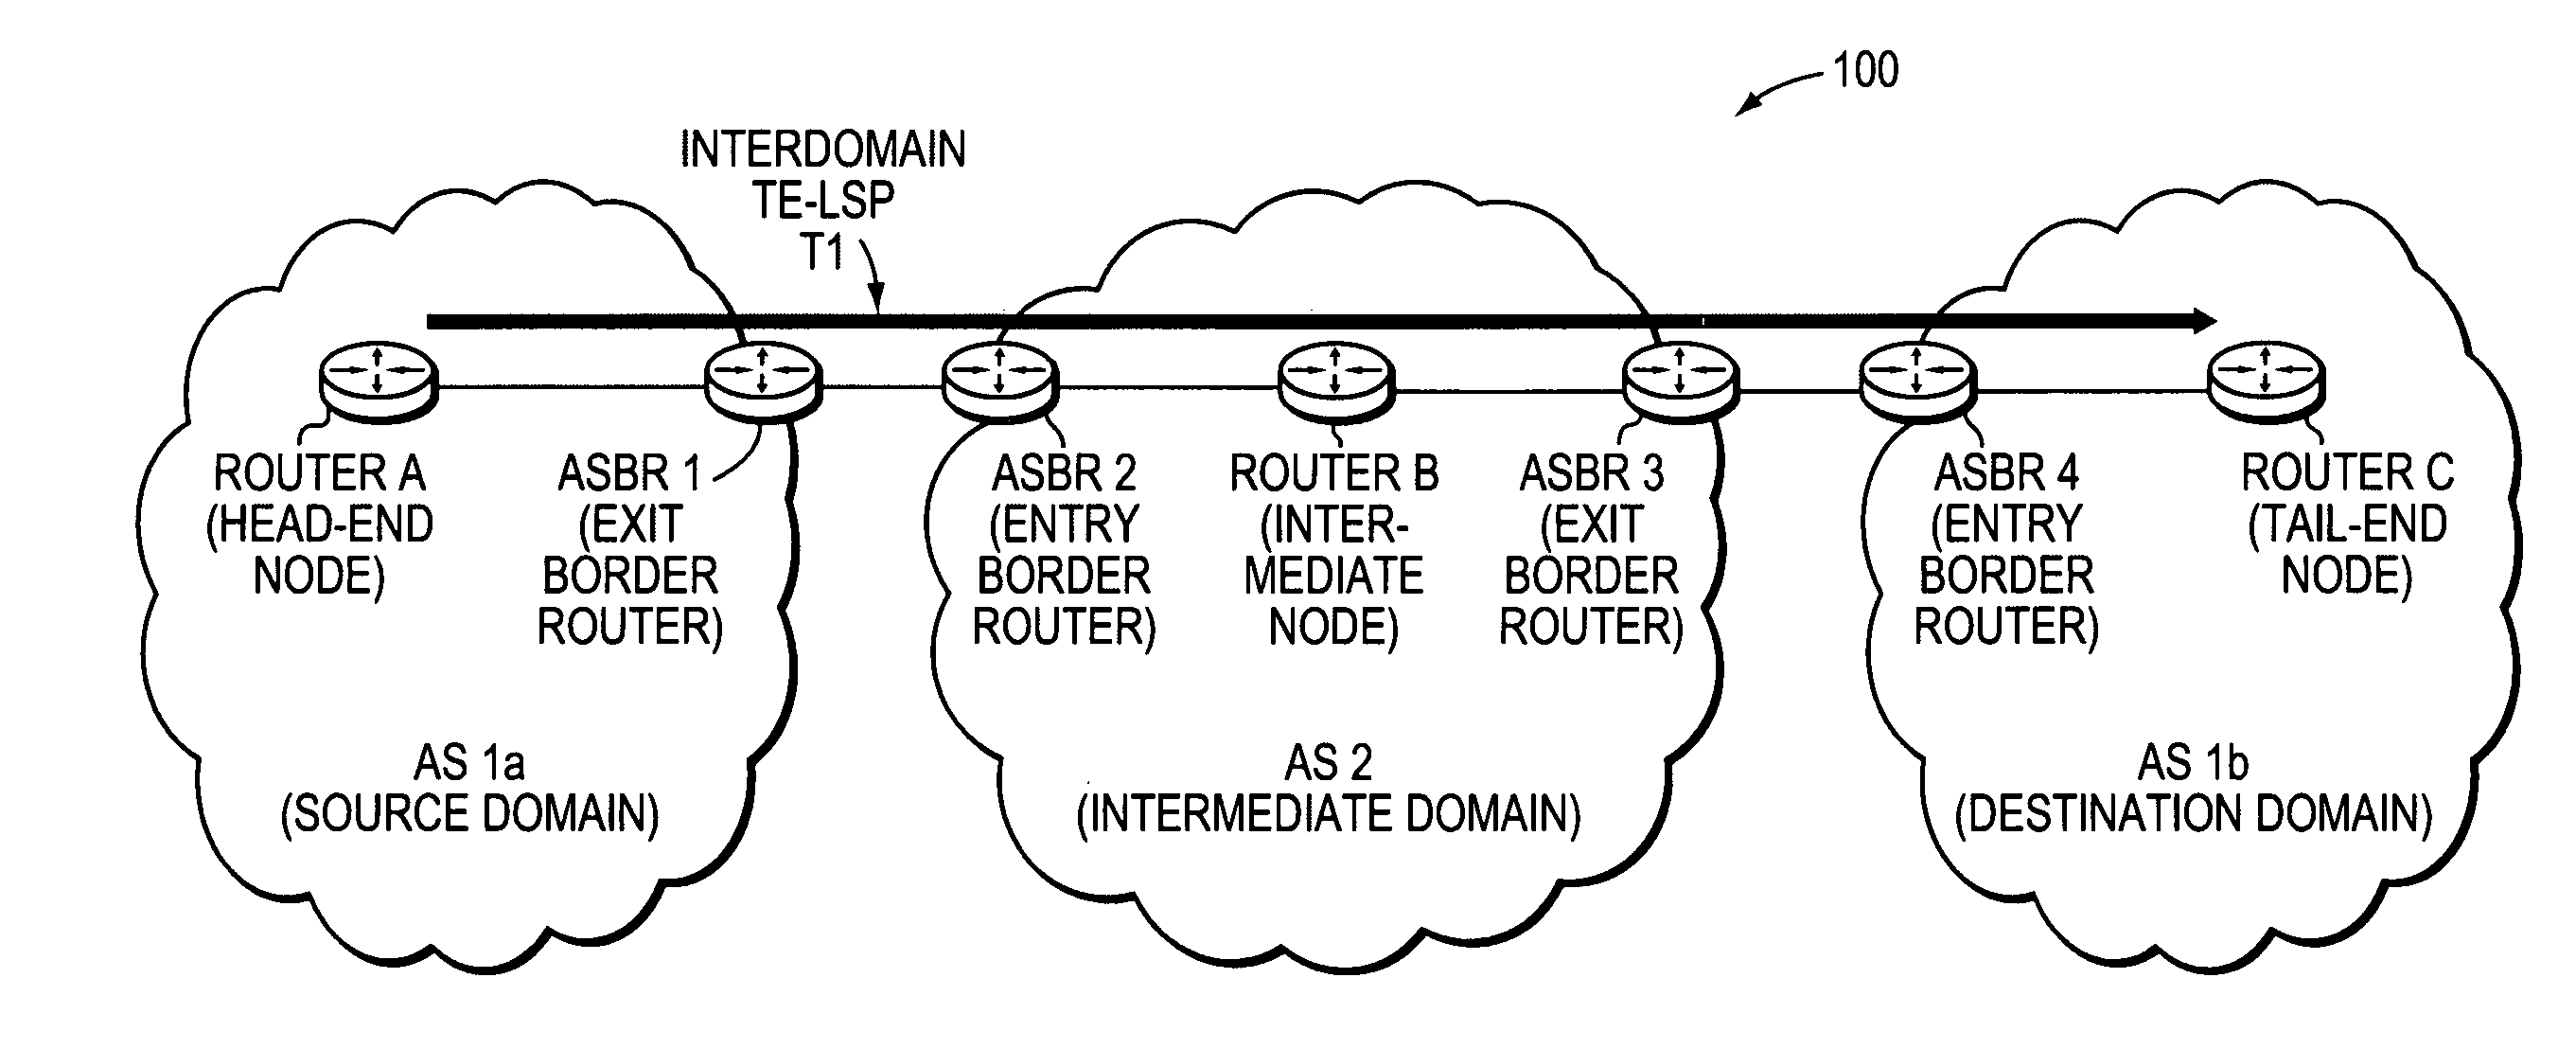 Technique for dynamically restoring original TE-LSP attributes for interdomain TE-LSPs